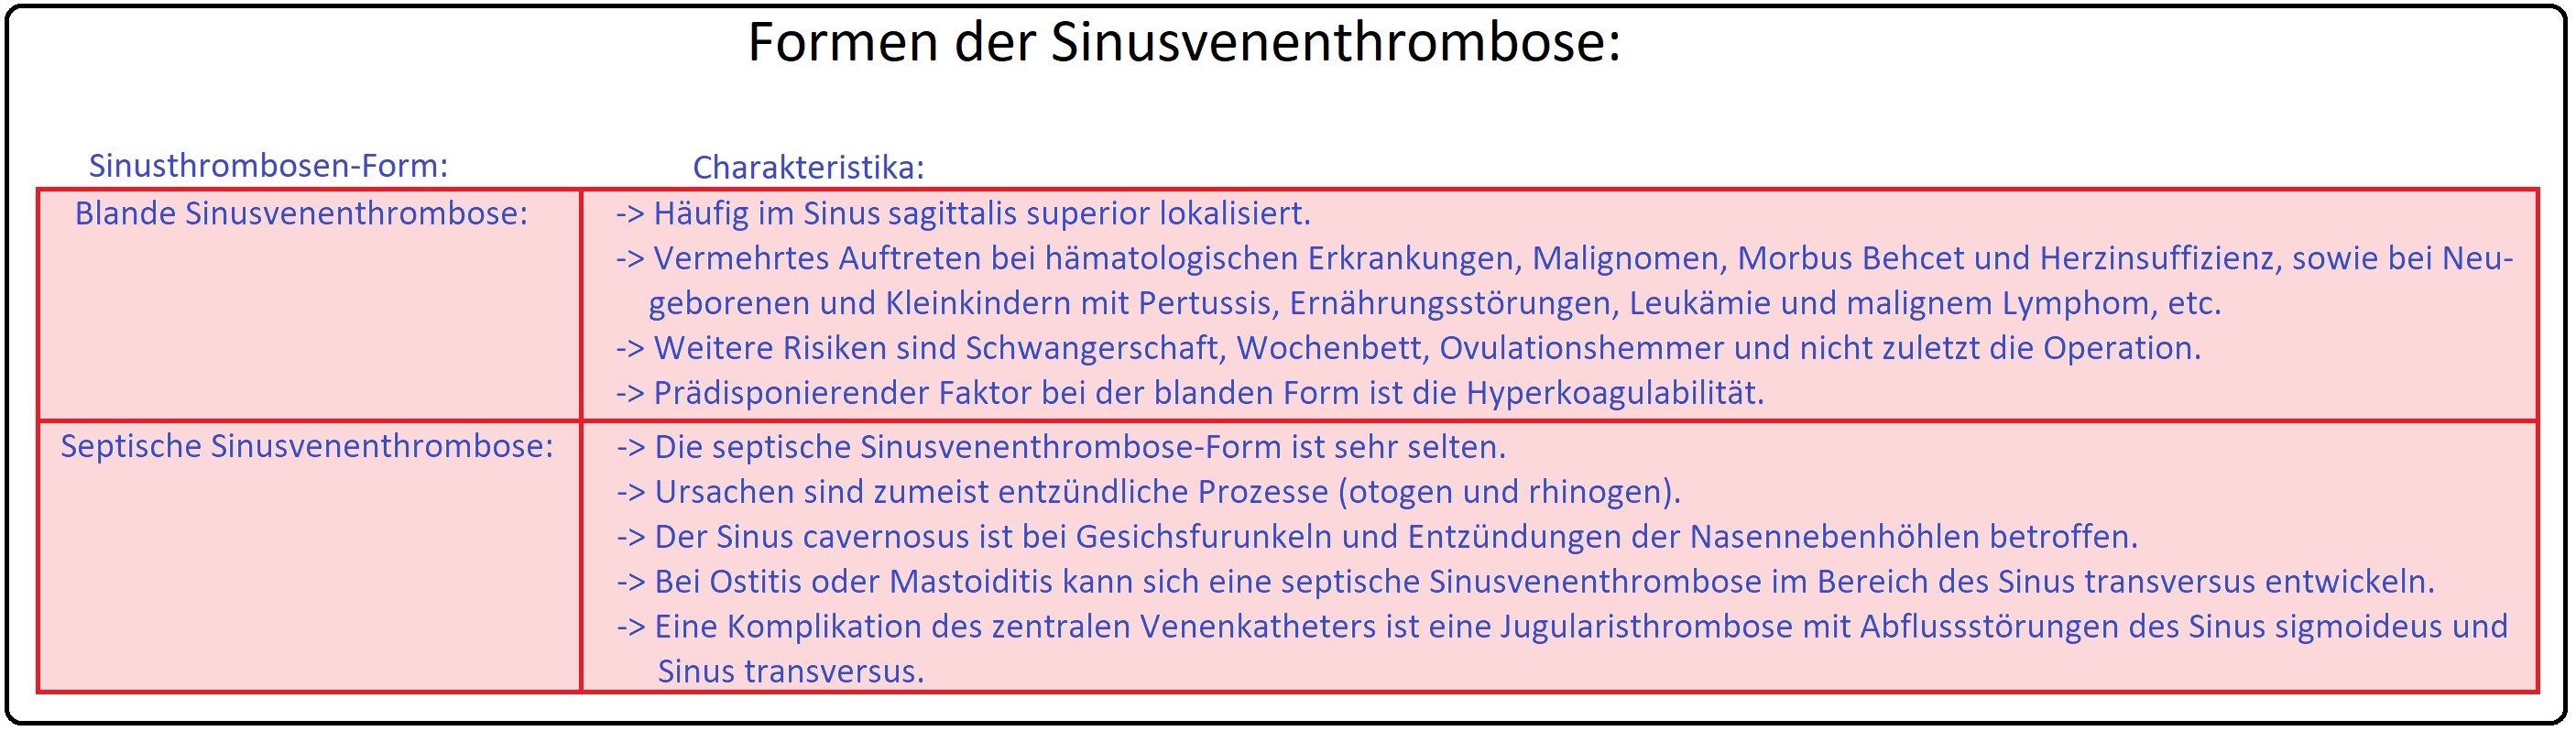 043 Formen der Sinusvenenthrombose